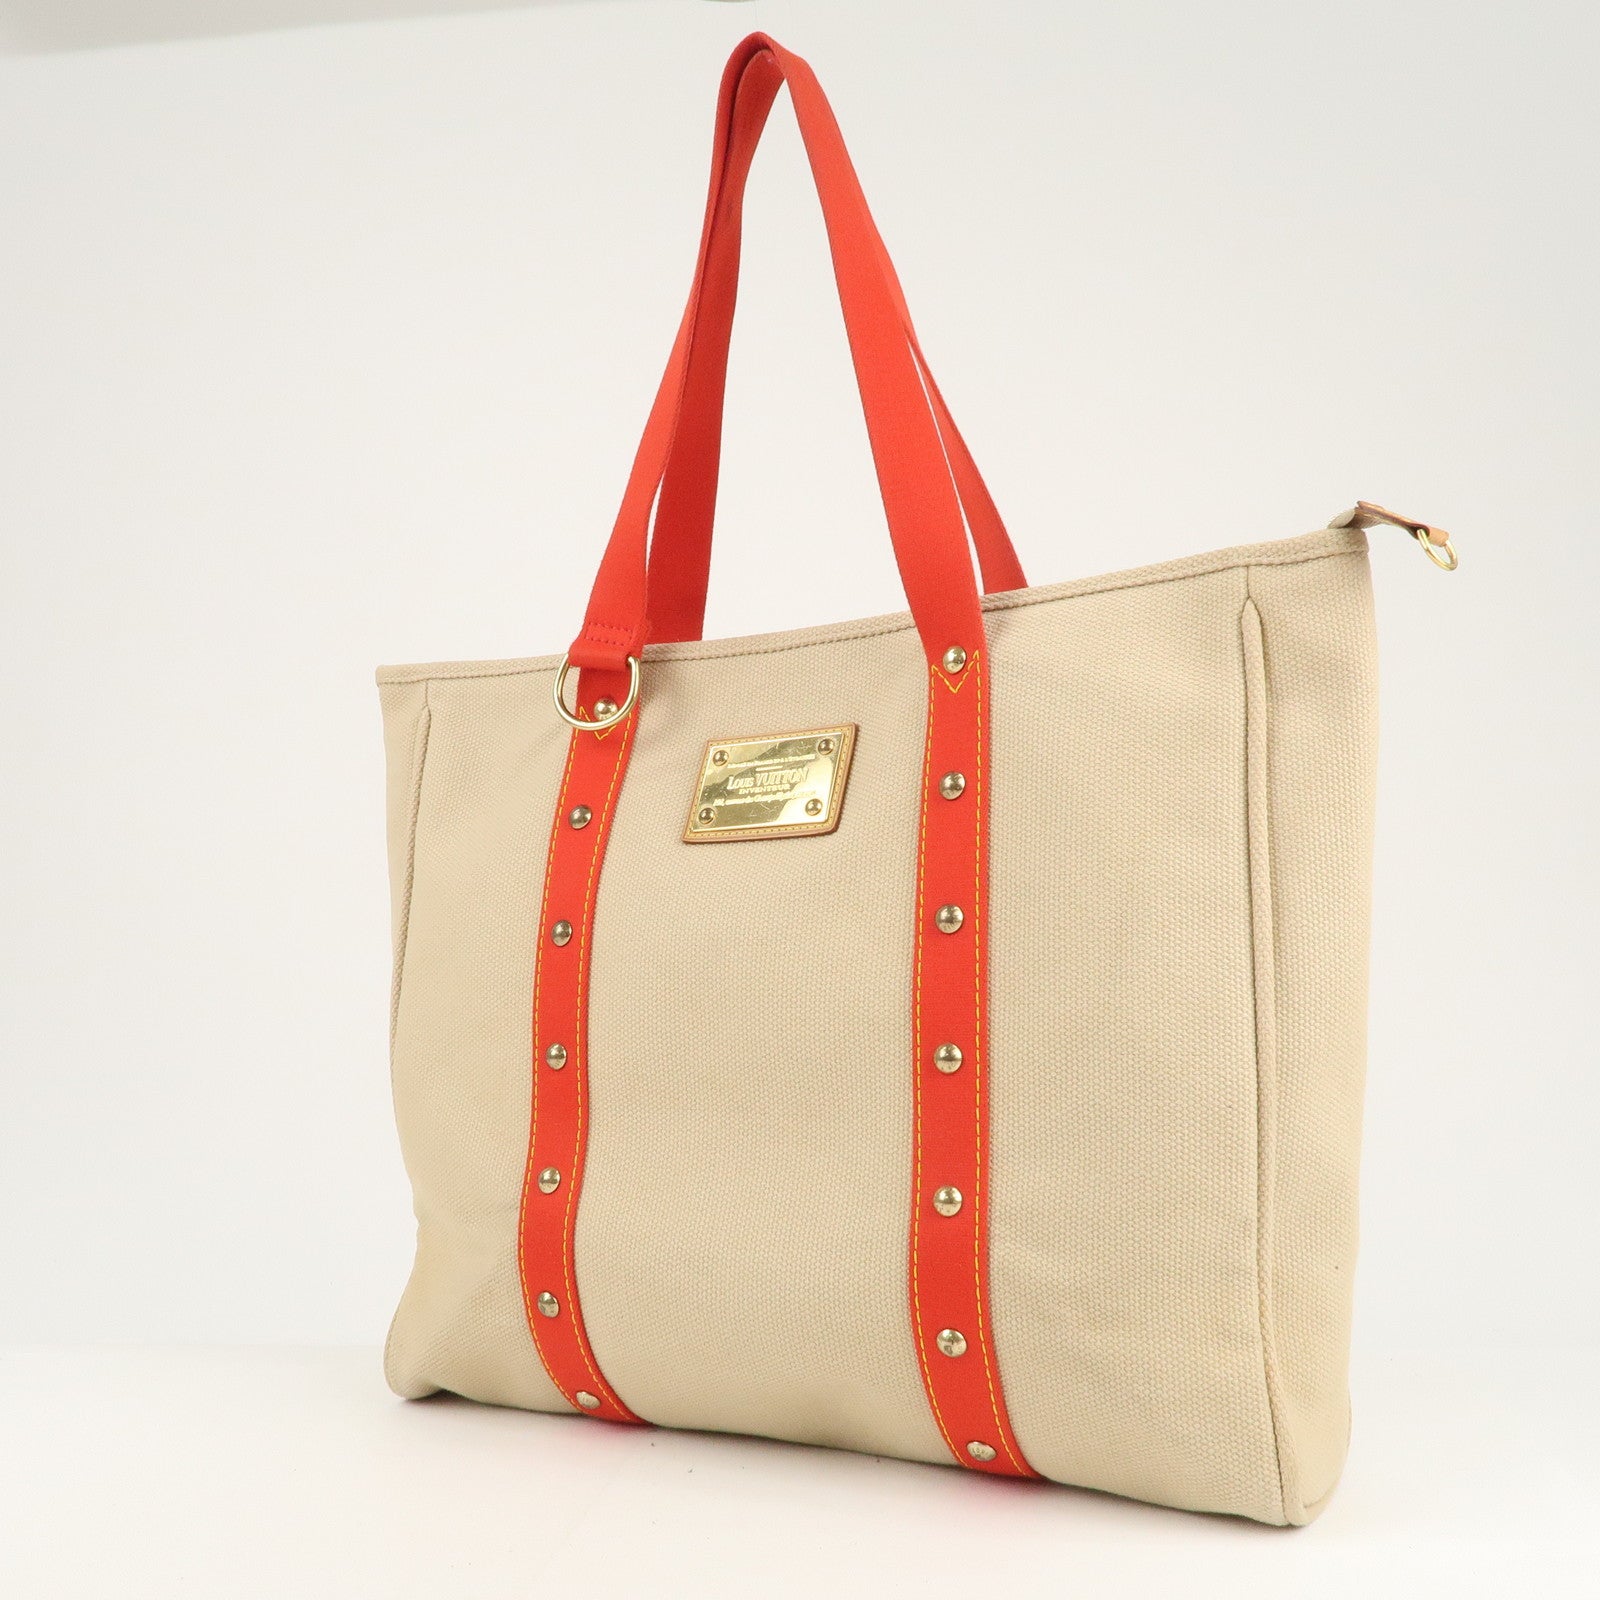 Louis-Vuitton-Antigua-Cabas-GM-Canvas-Tote-Bag-Beige-Red-M40032